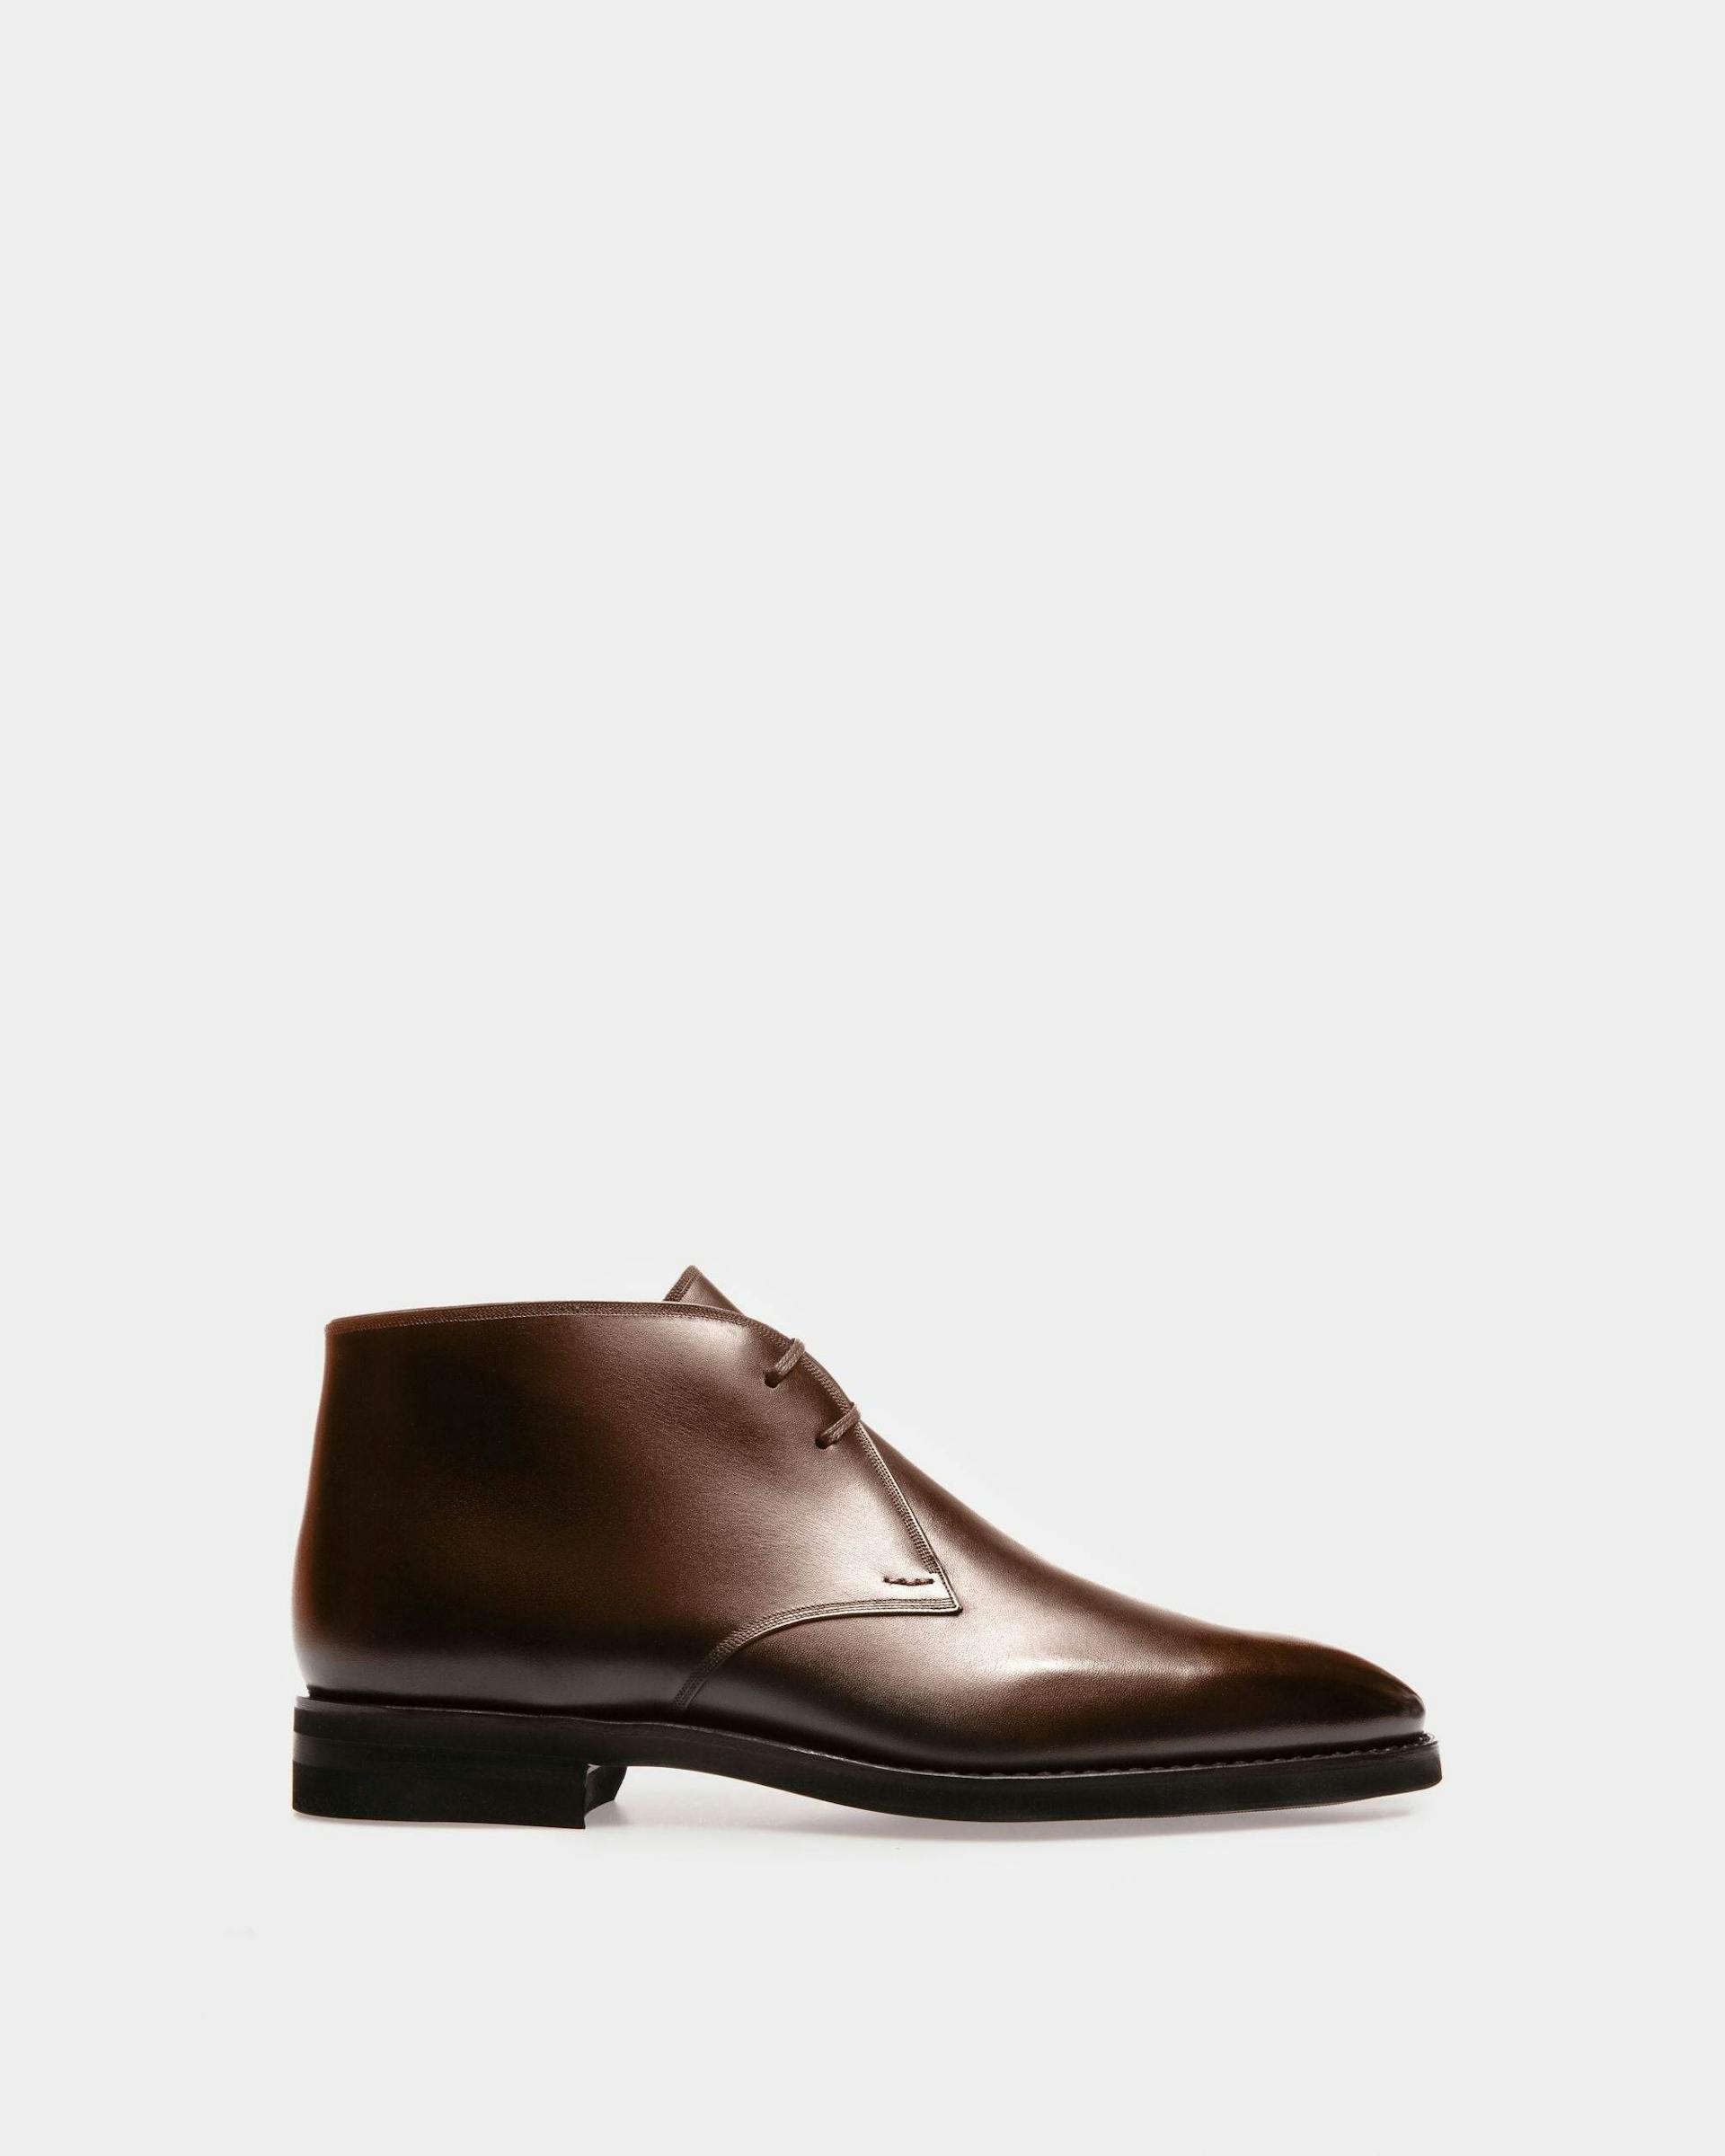 SCRIBE NOVO Leather Desert Boots In Brown - Men's - Bally - 01